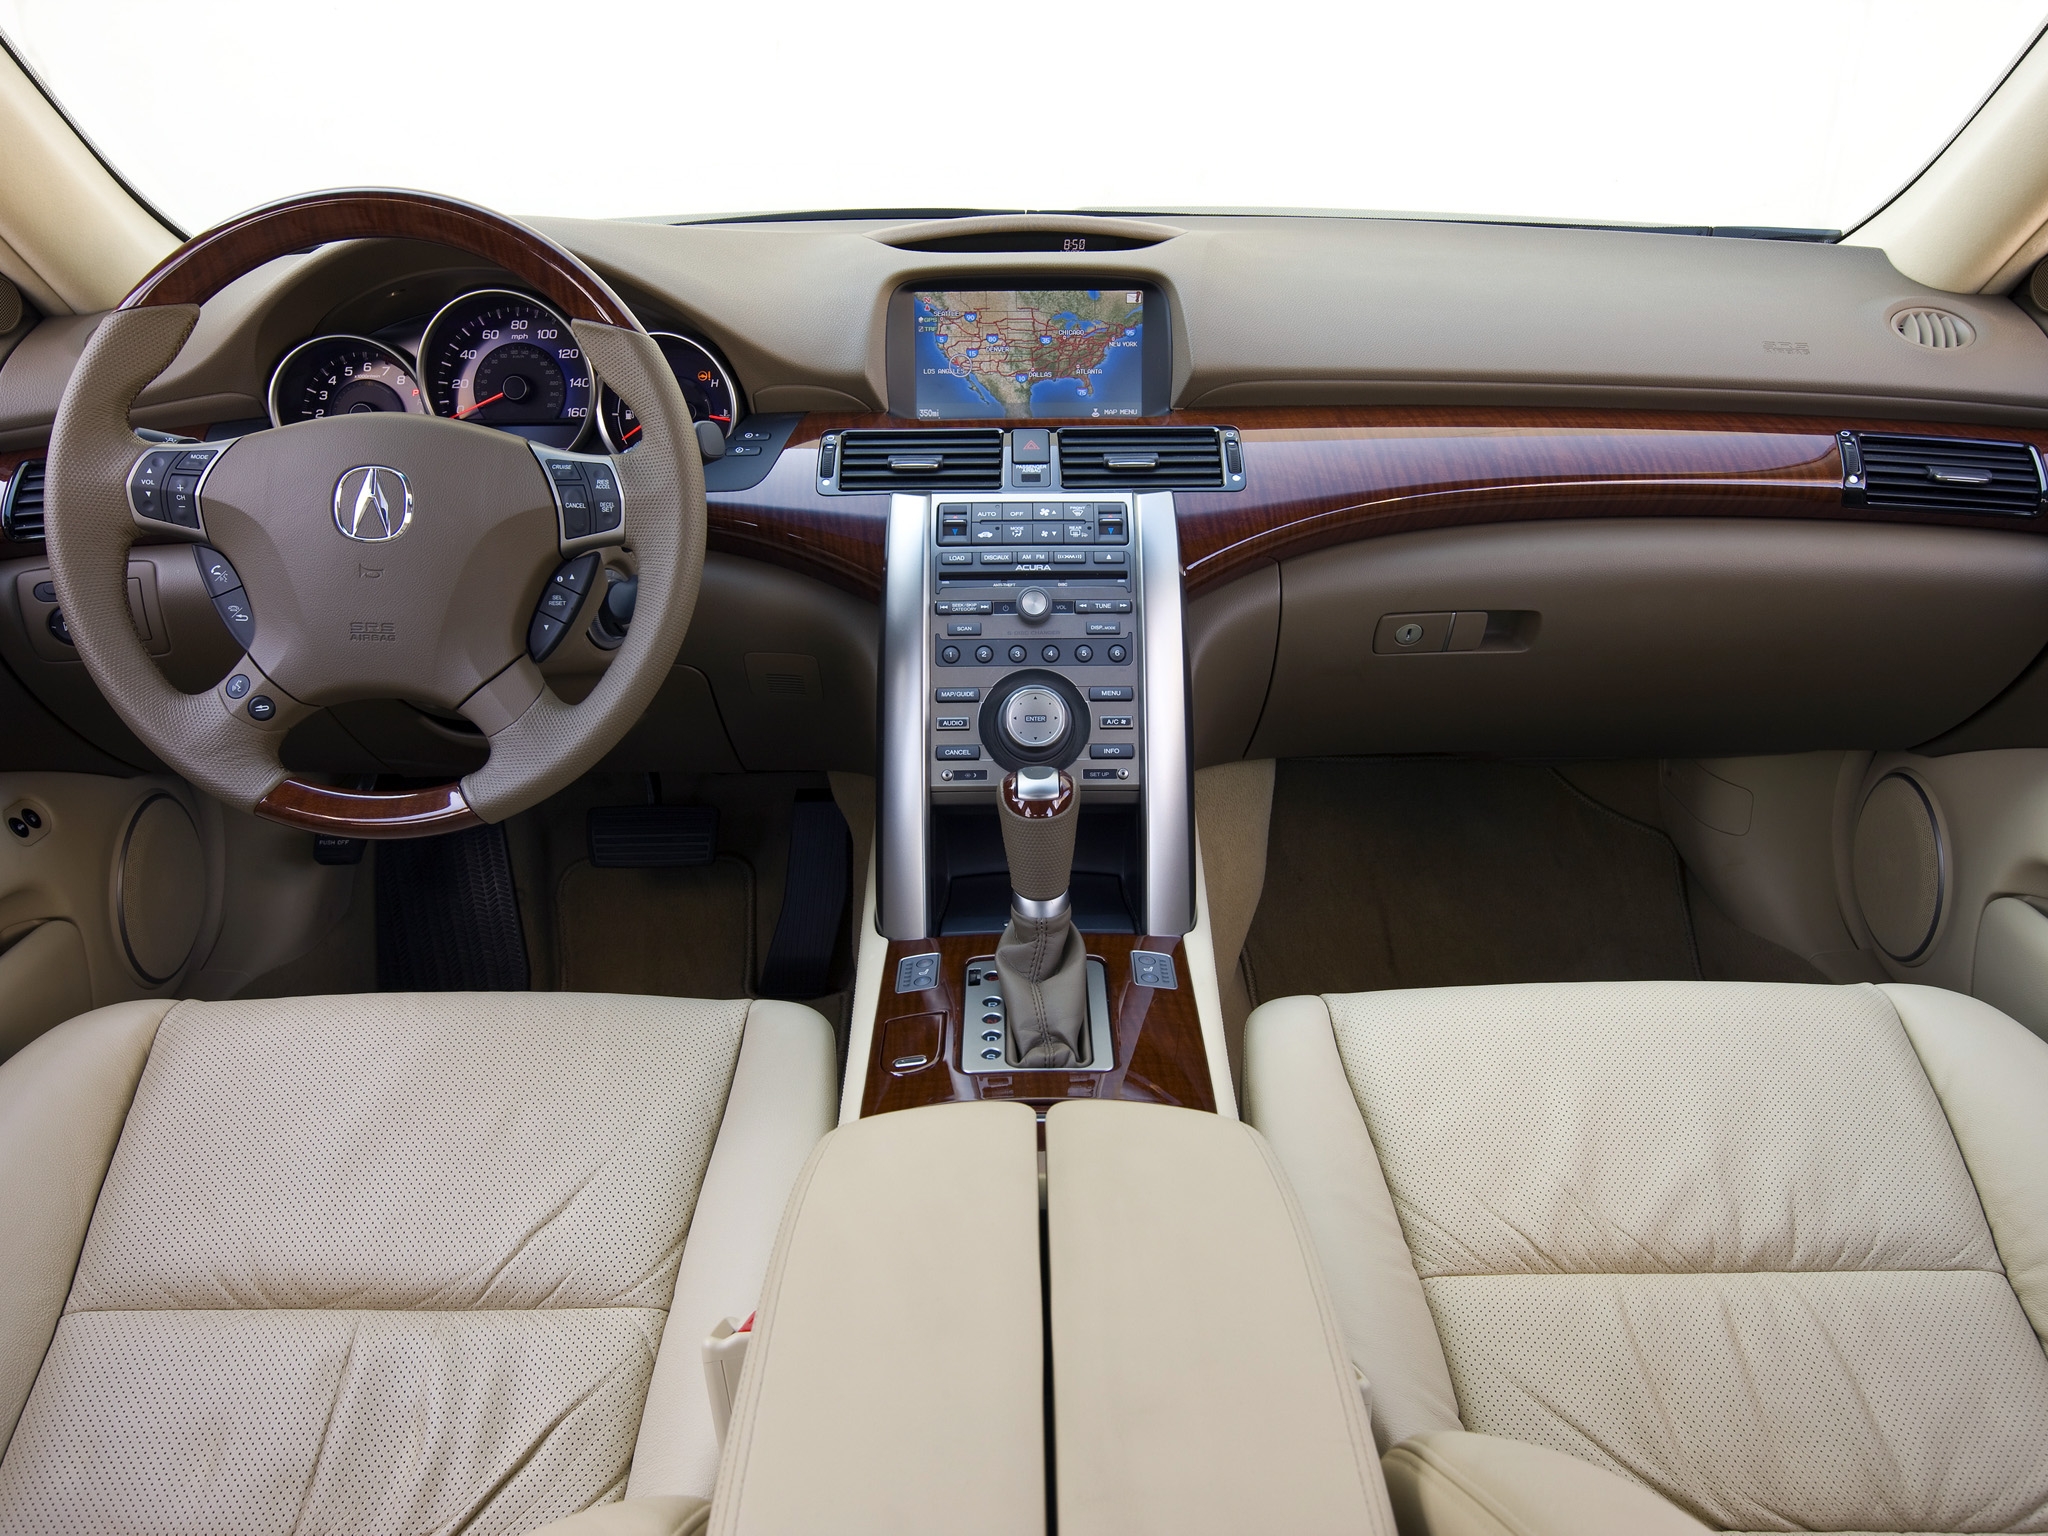 acura, interior, cars, akura, steering wheel, rudder, salon, speedometer, rl phone background